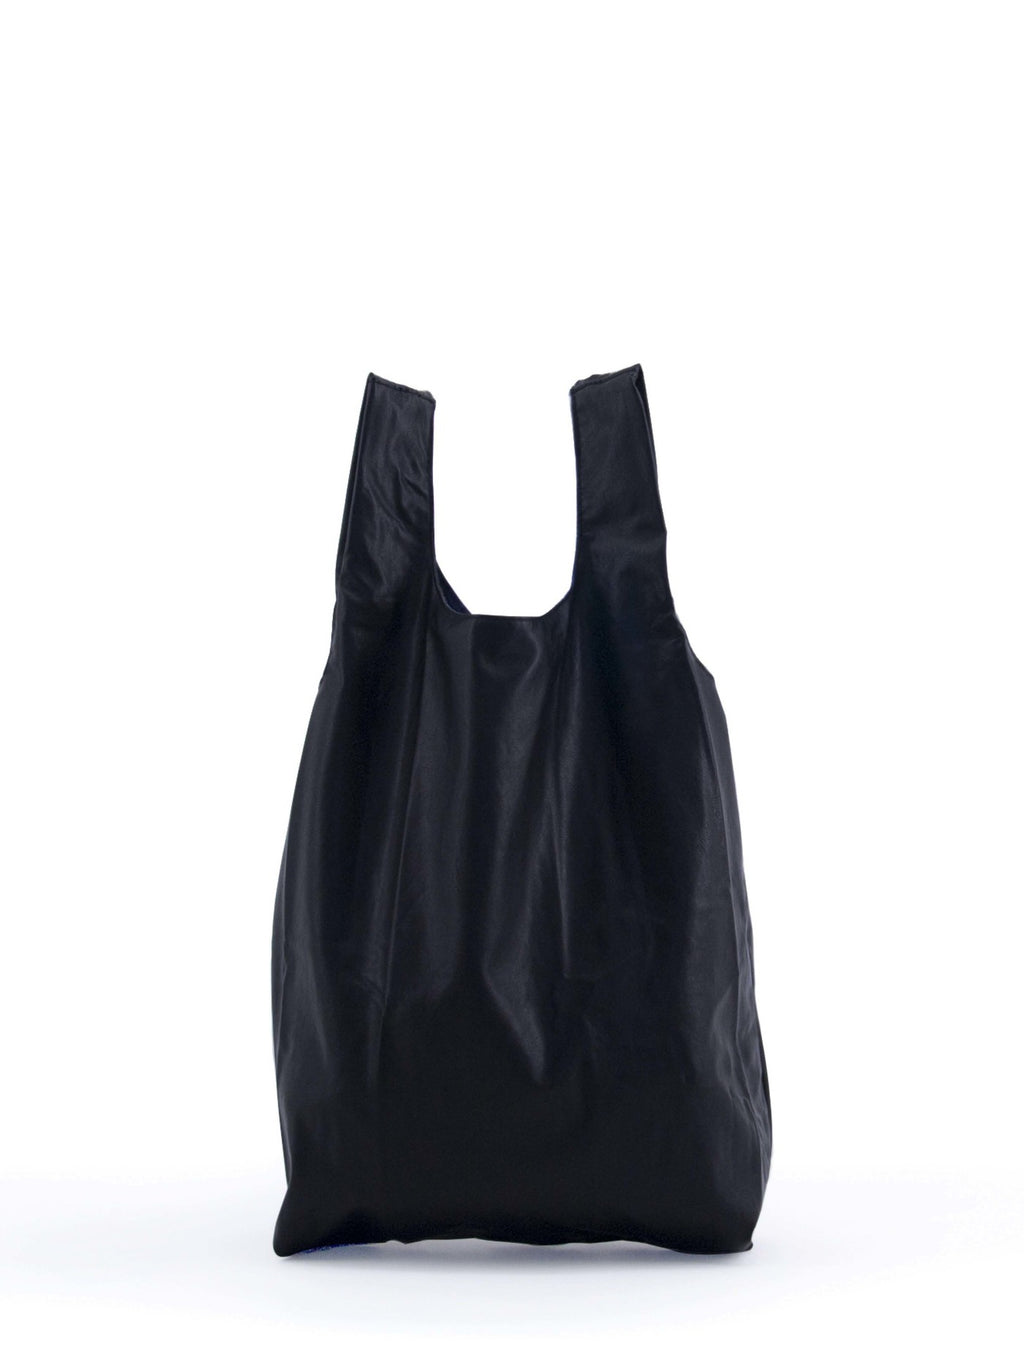 Tinne and Mia Market Bag - Black